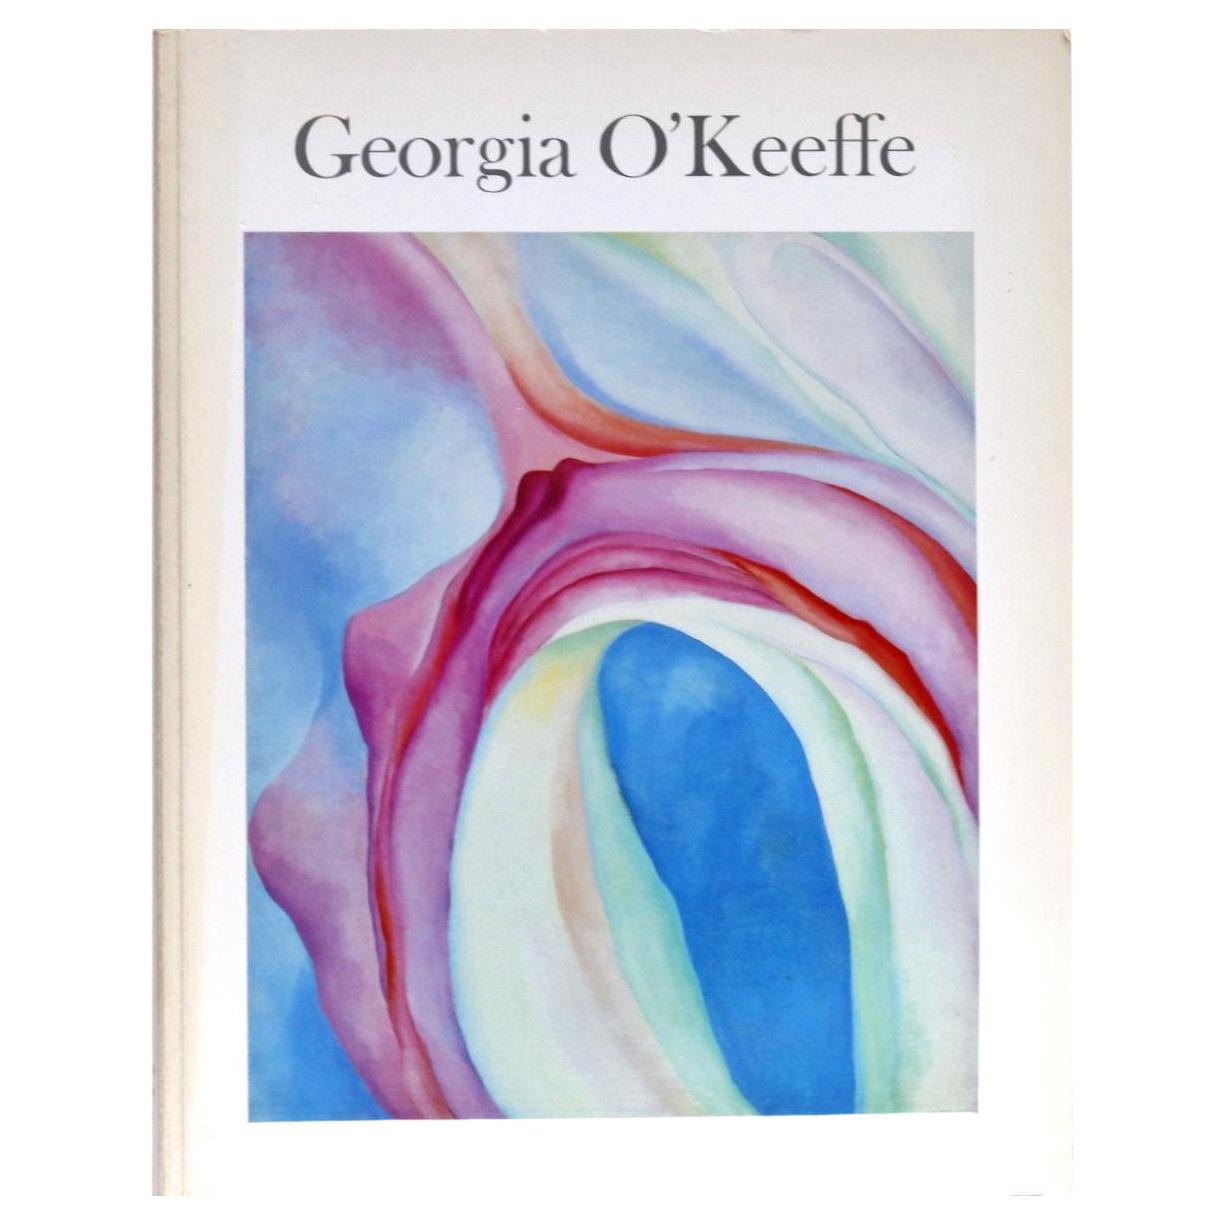 Georgia O'Keeffe 'Art and Letters' Book